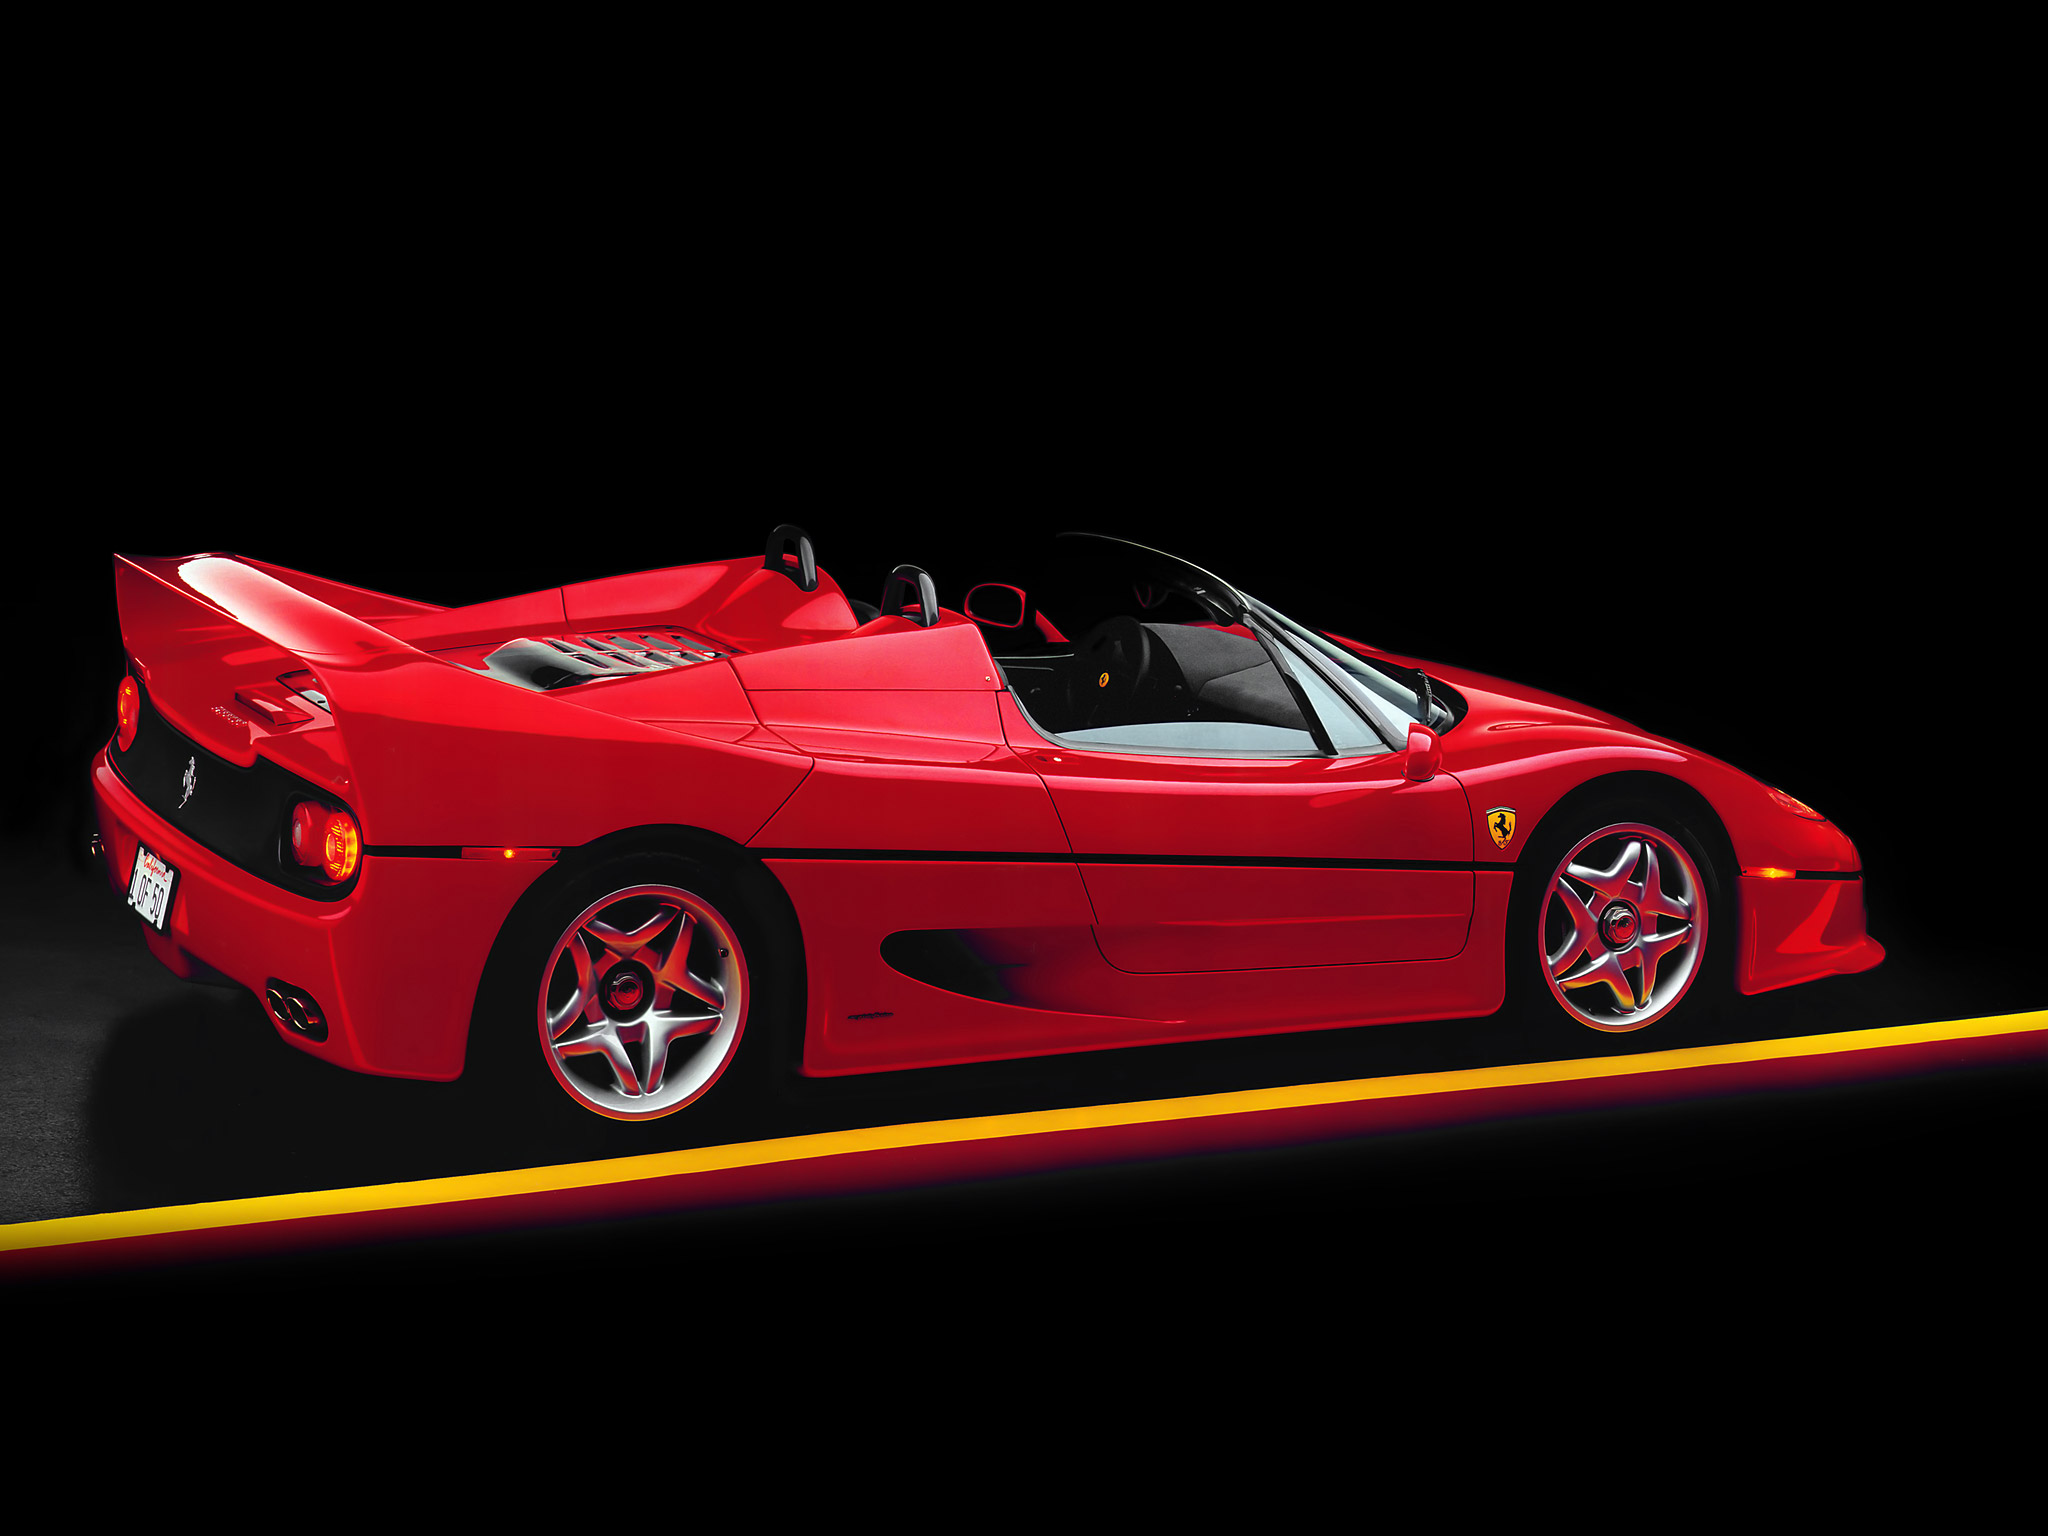  1995 Ferrari F50 Wallpaper.